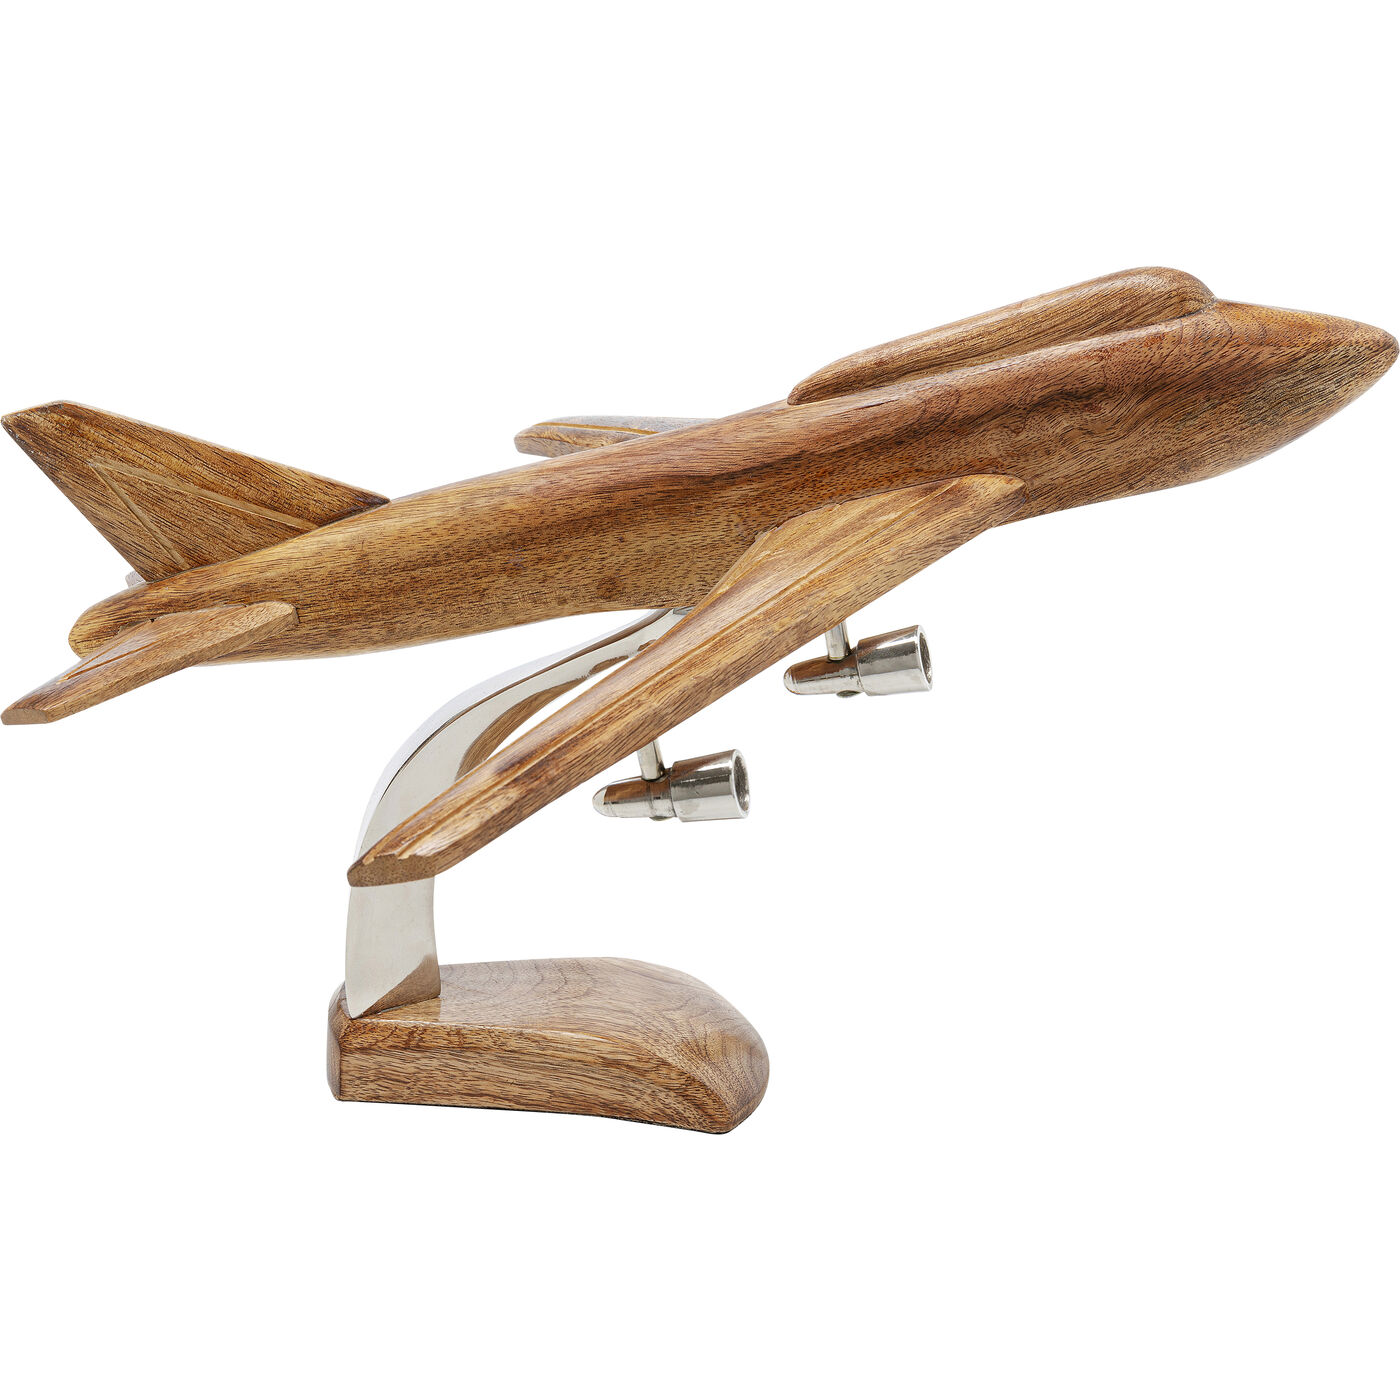 Beeld Wood Plane 25cm Kare Design Beeld 53965